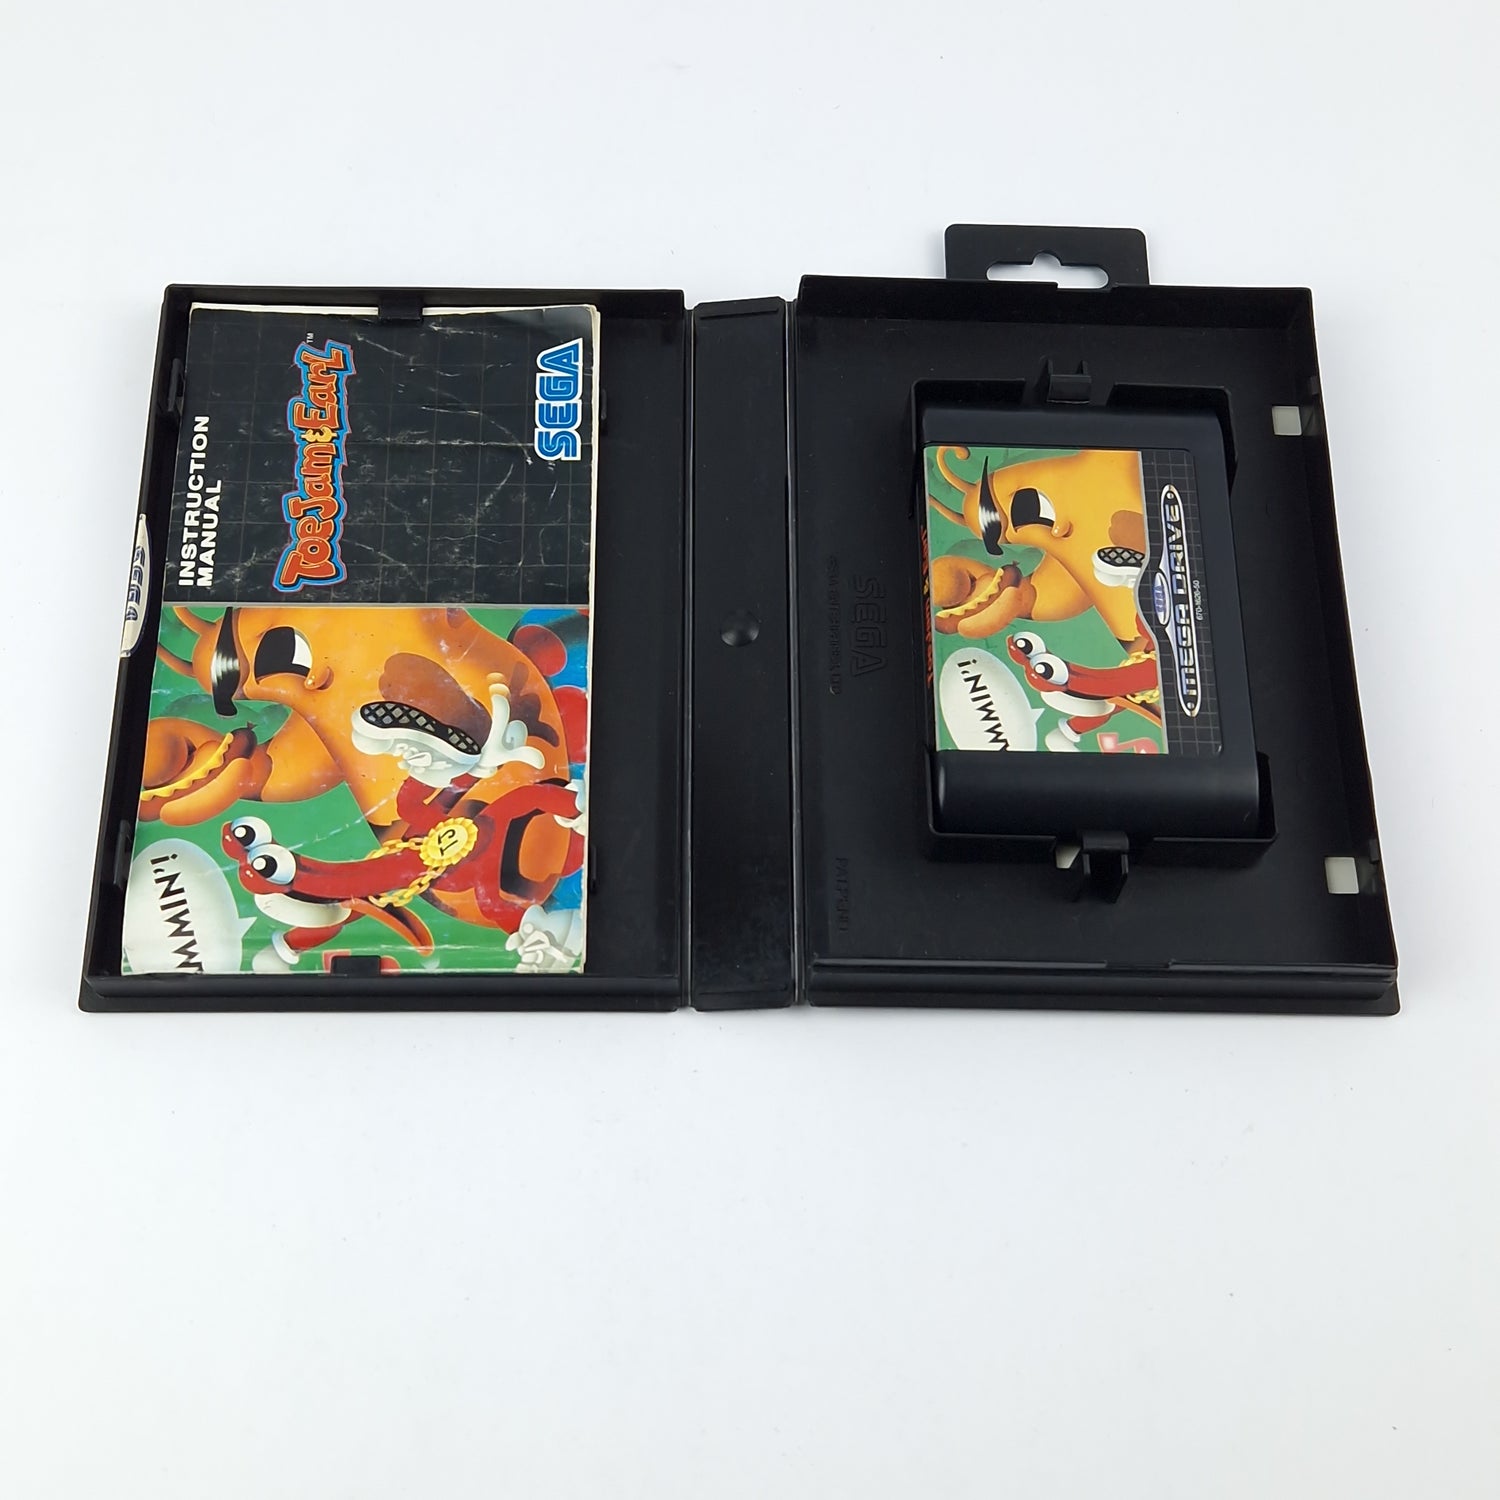 Sega Mega Drive Game: ToeJam & Earl - Module Instructions OVP cib / MD PAL Game